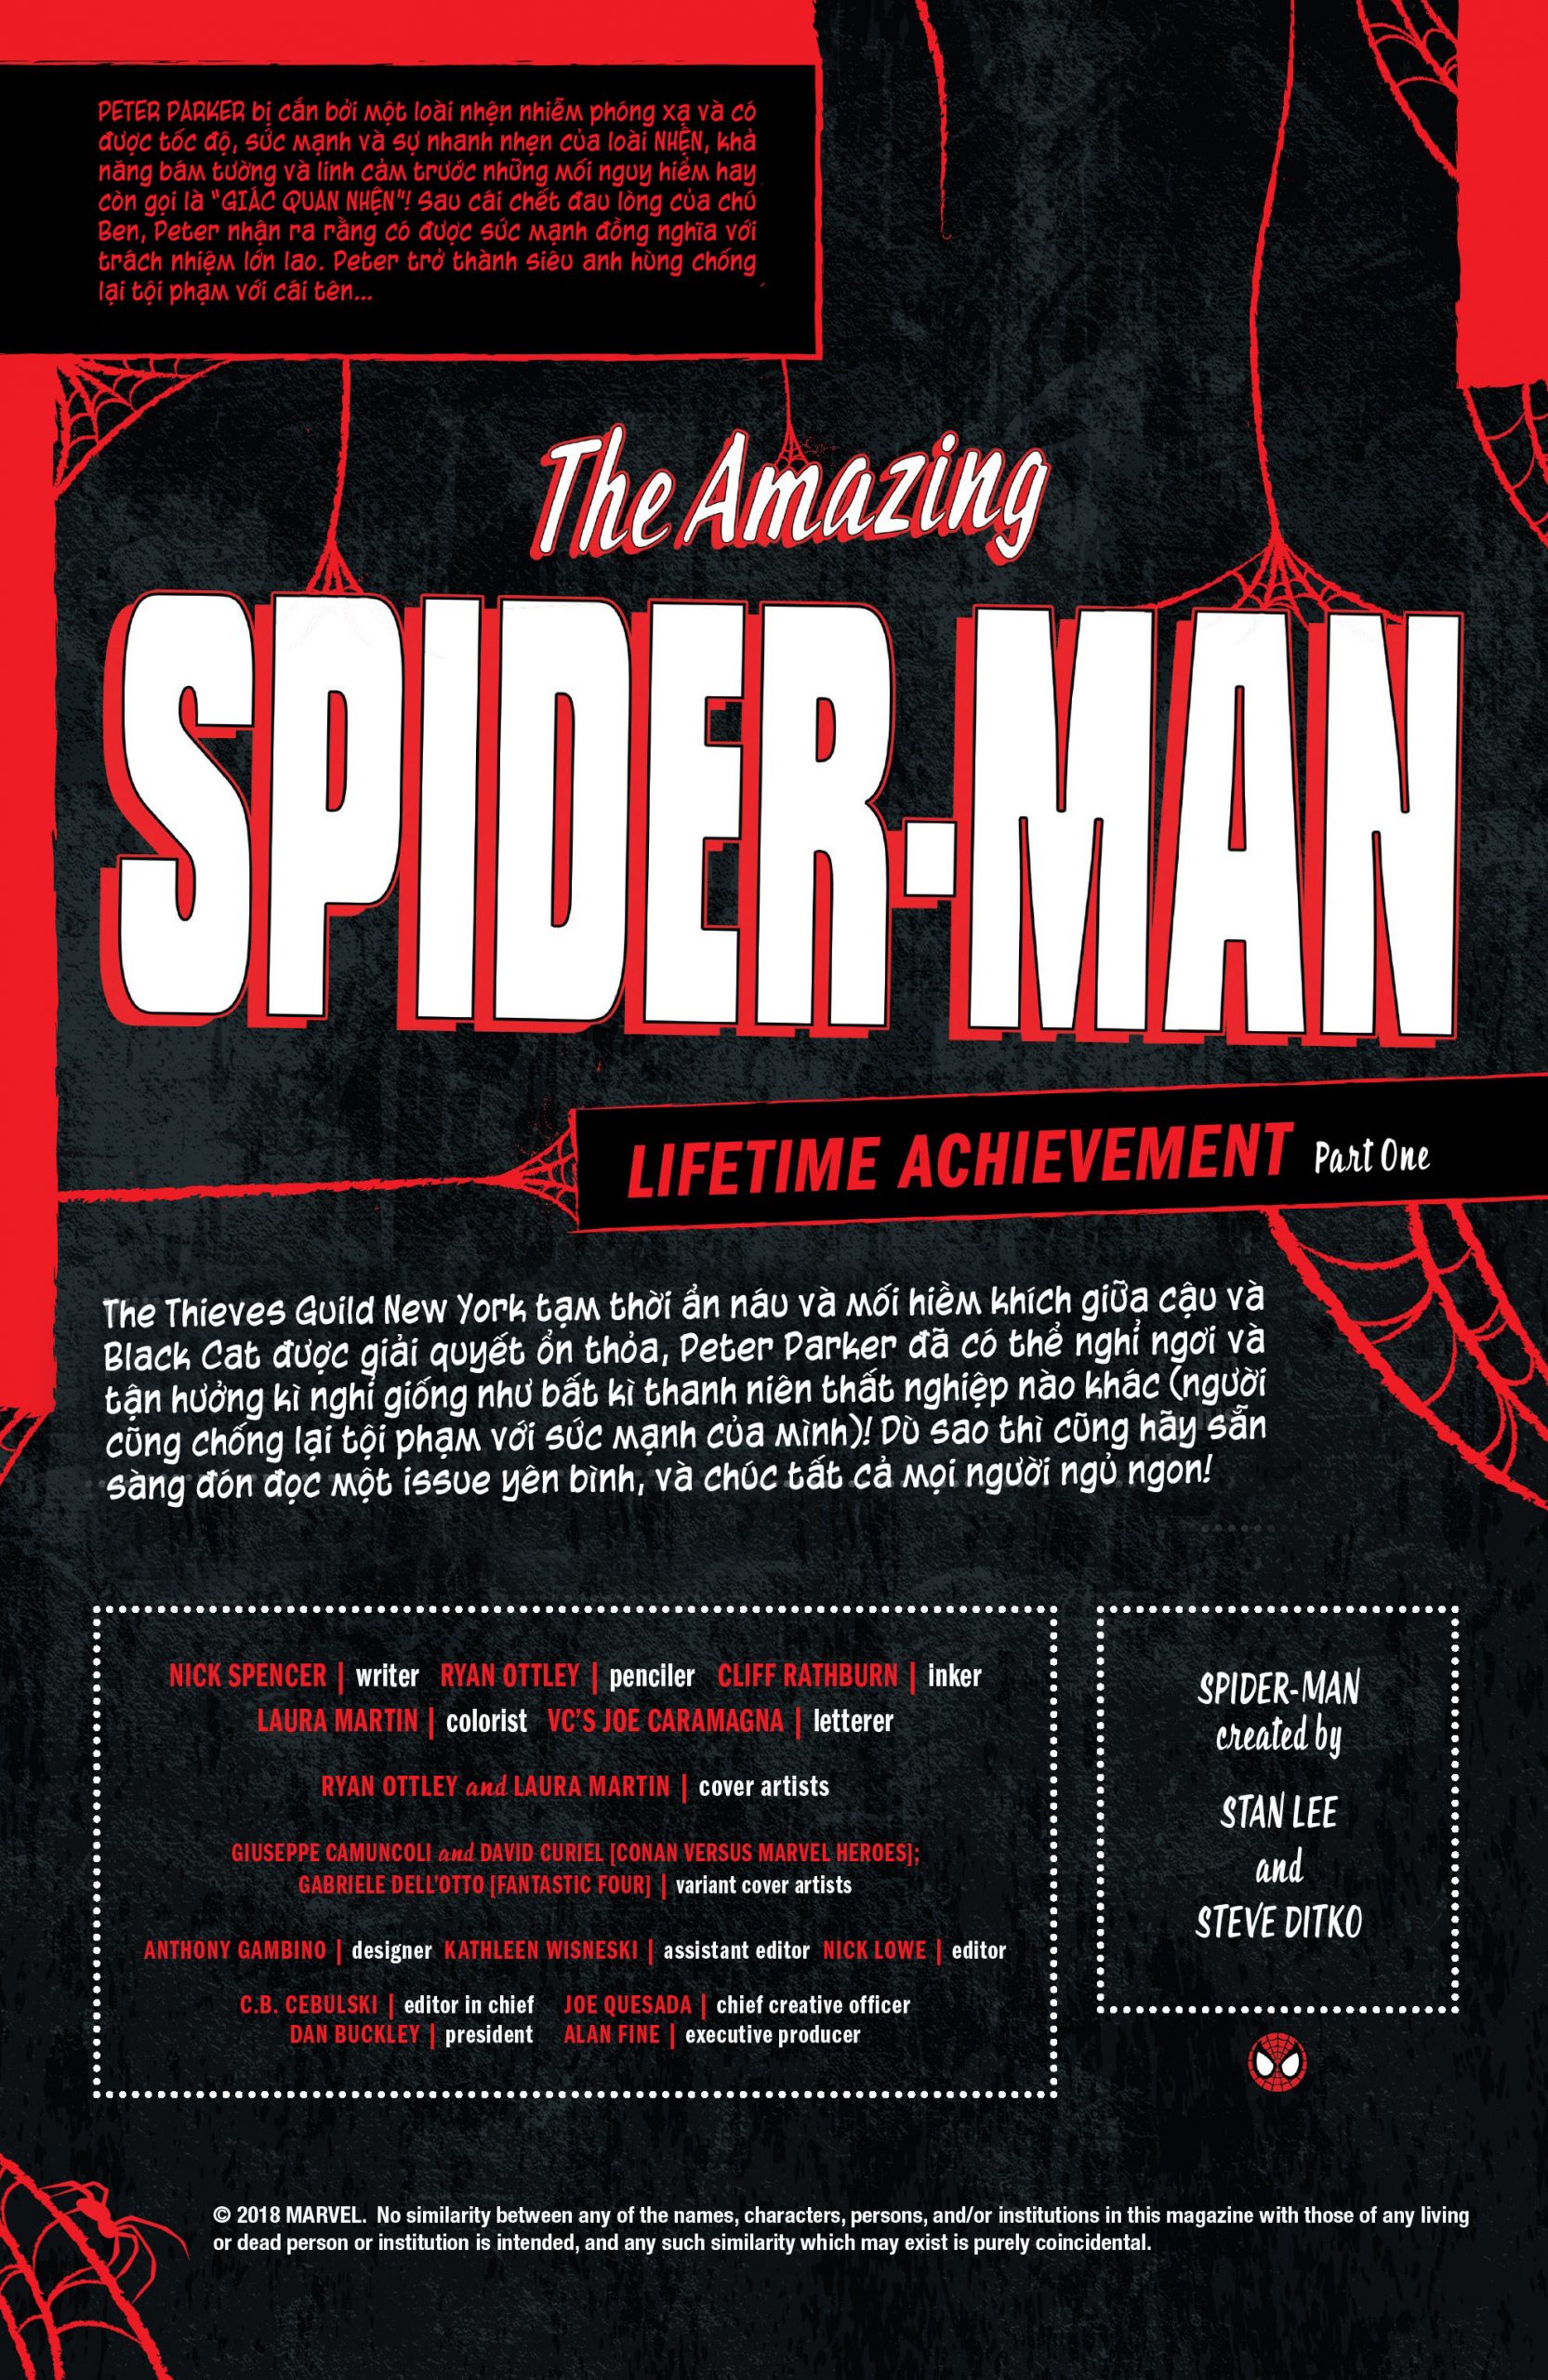 https://langgeek.net/wp-content/webpc-passthru.php?src=https://langgeek.net/wp-content/uploads/2021/11/Amazing-Spider-Man-011-001-scaled.jpg&nocache=1